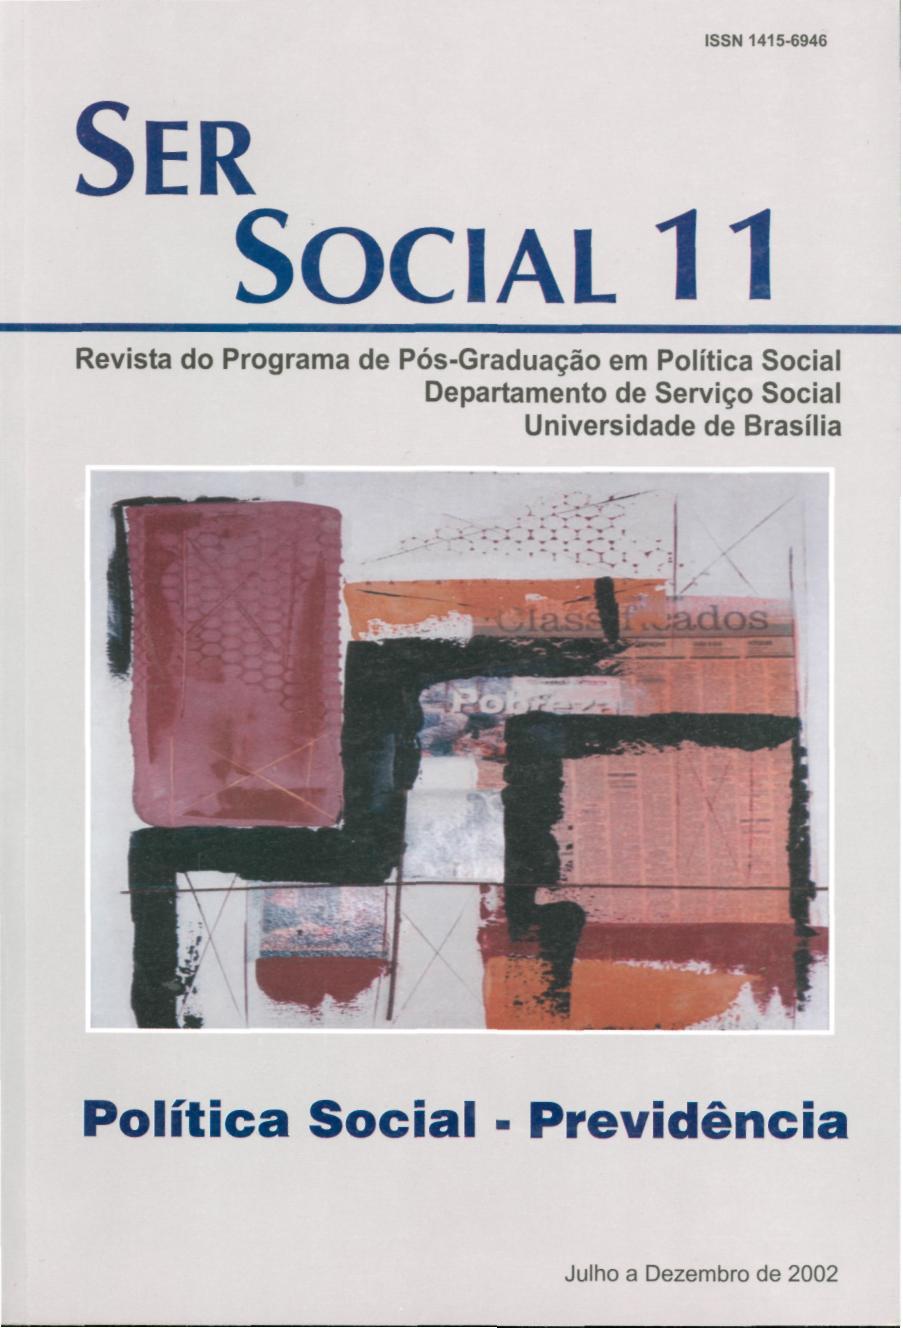 					View No. 11 (2002): Política Social - Previdência
				